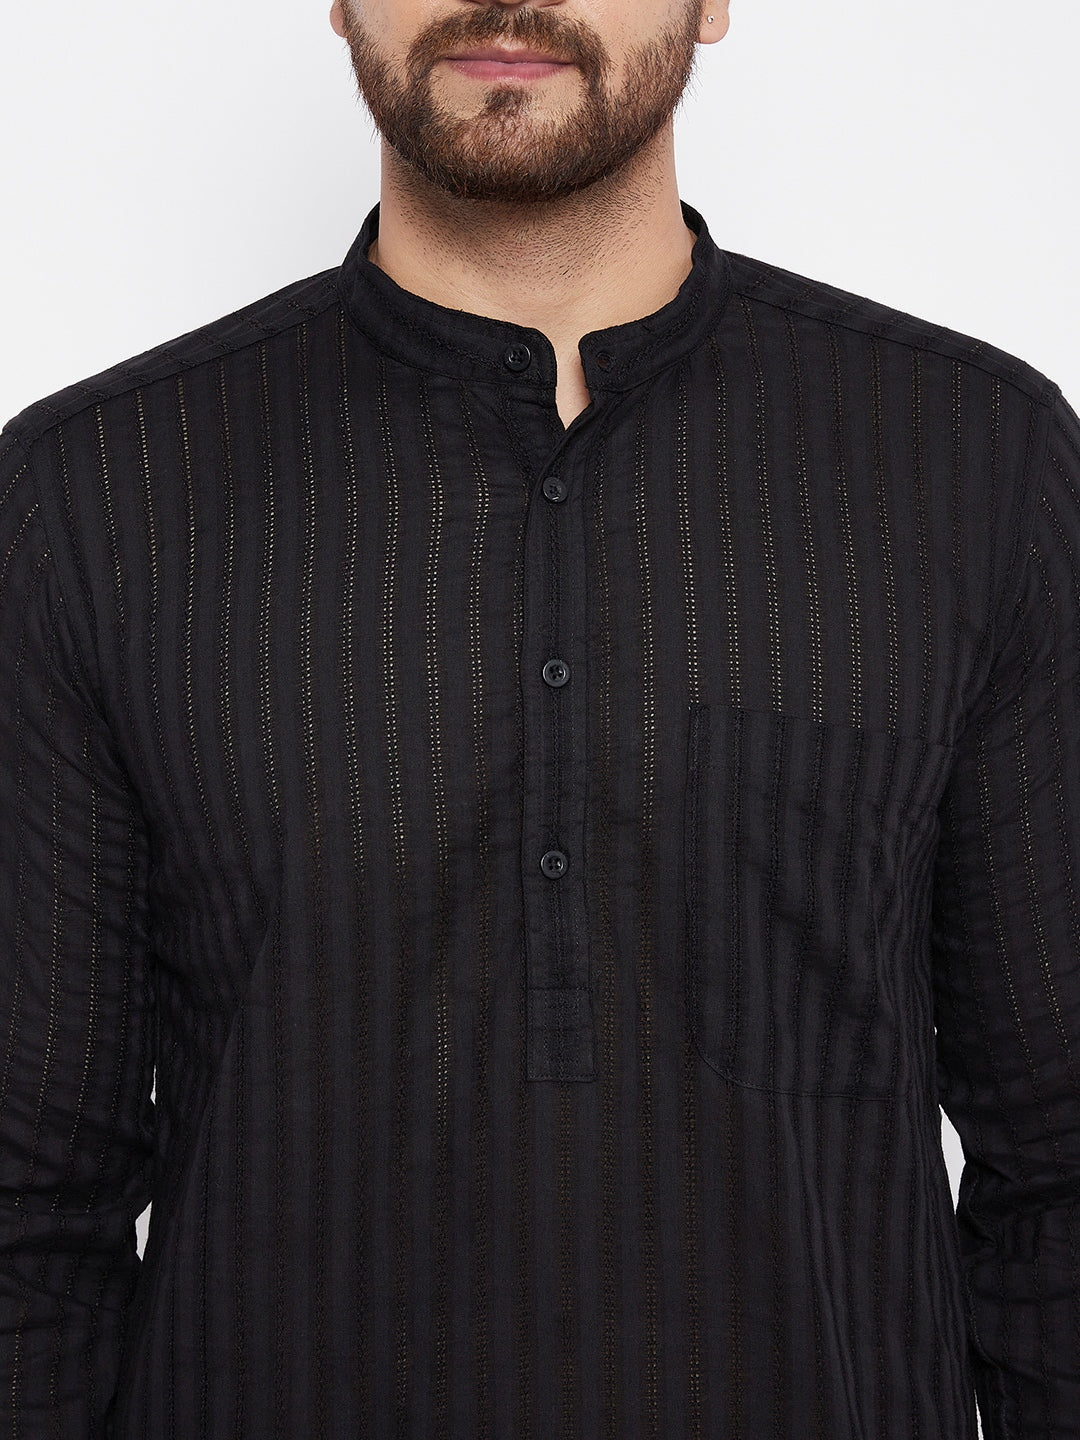 Men's Pure Cotton Striped Black Kurta - Even Apparels